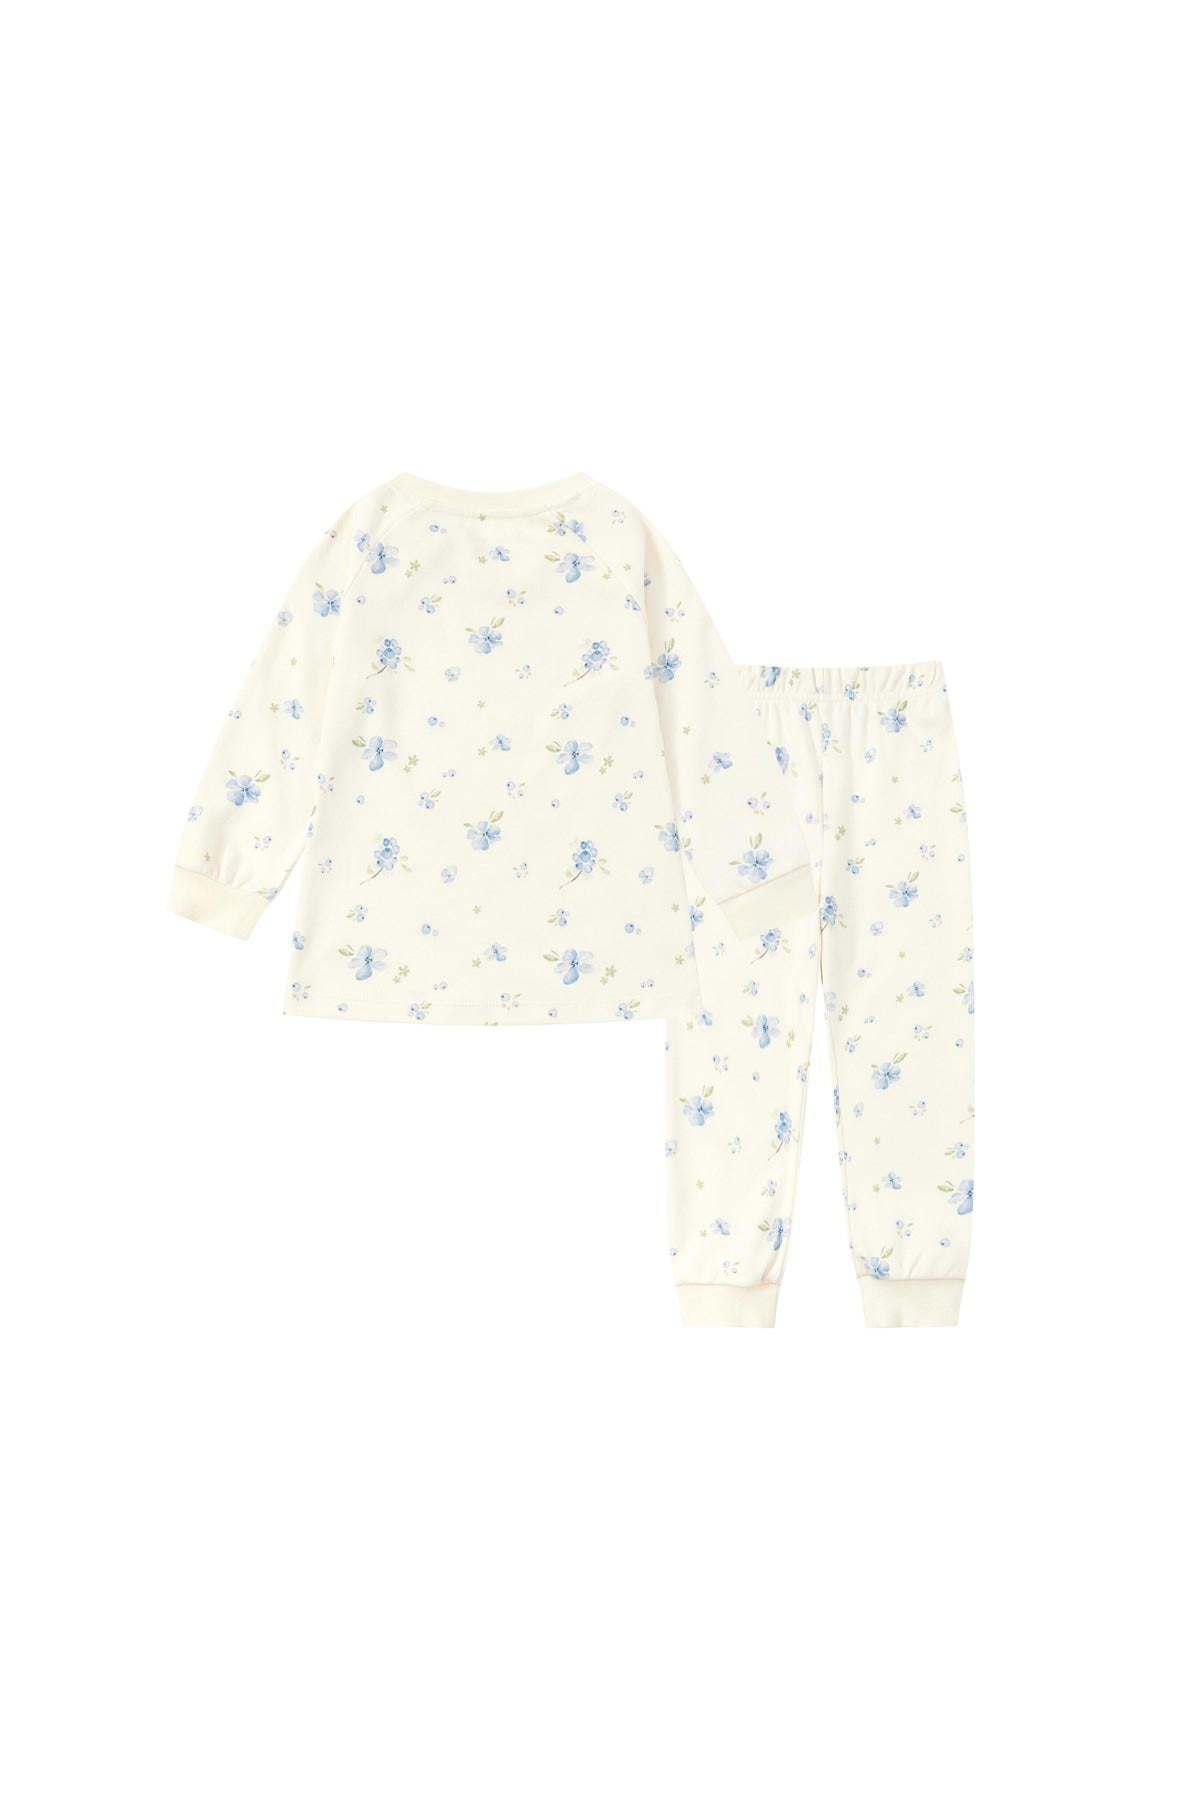 back of Organic Toddler Pajama Set-Blueberry